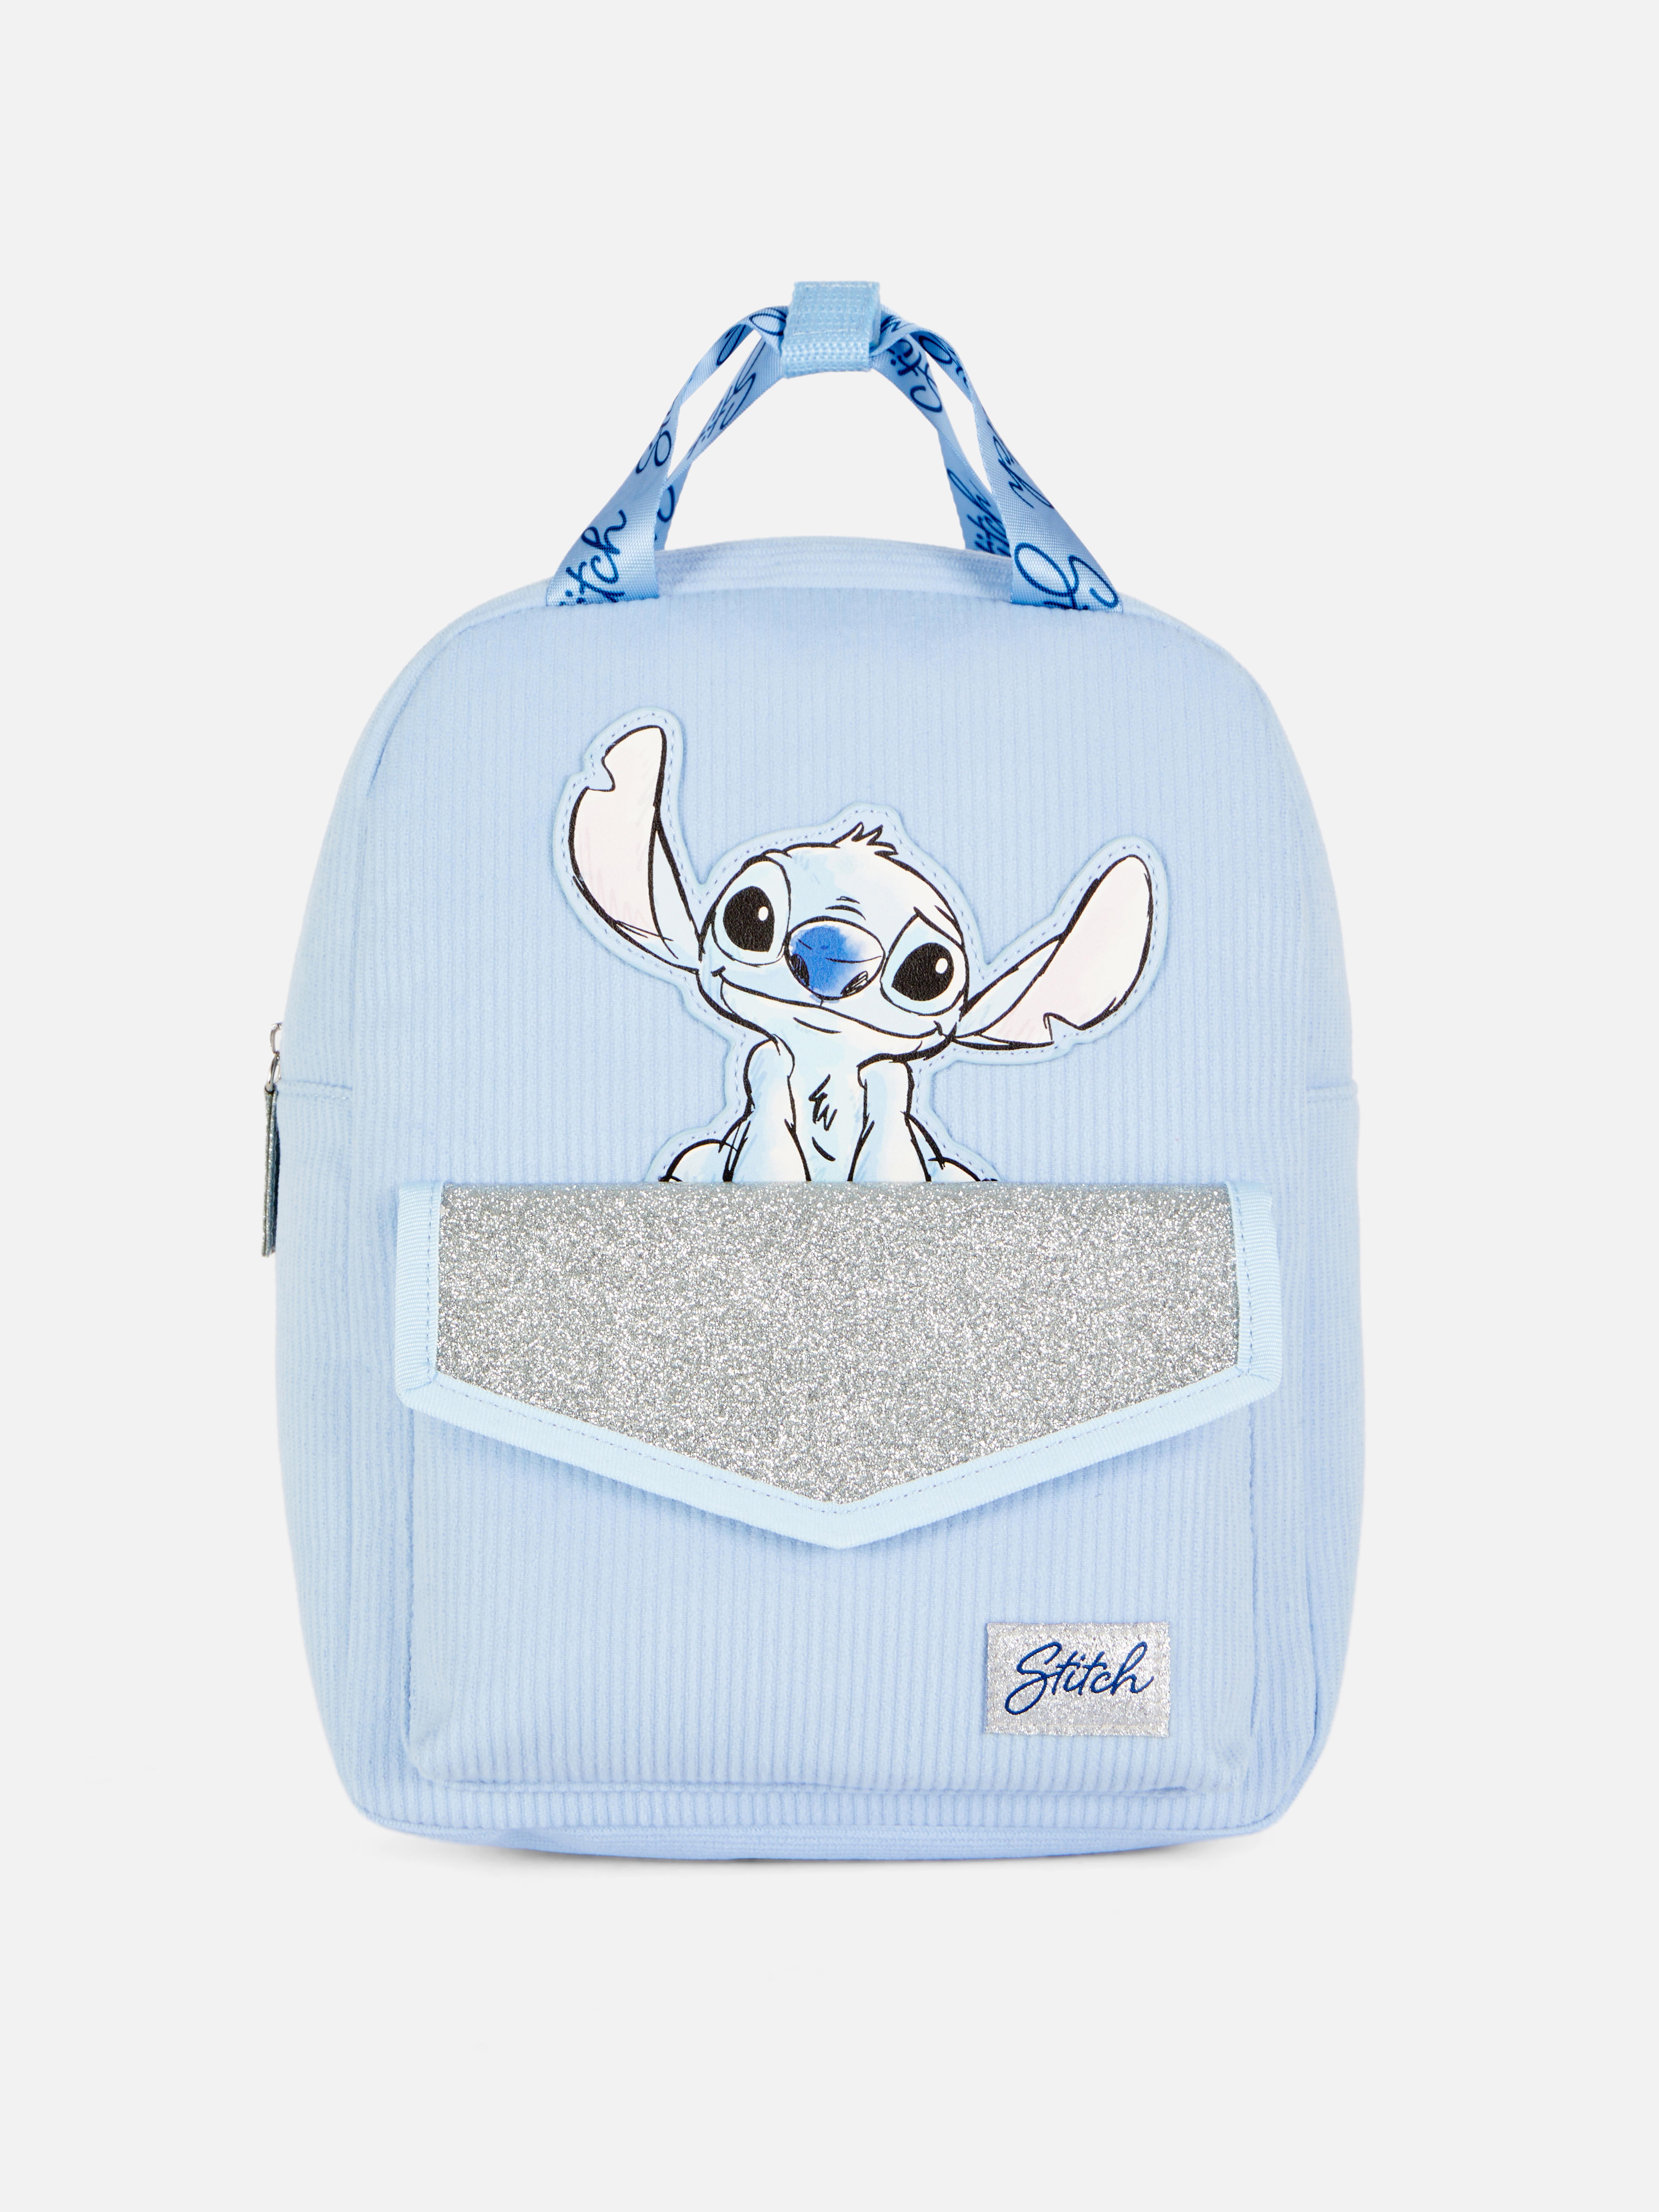 Disney’s Lilo & Stitch Corduroy Backpack